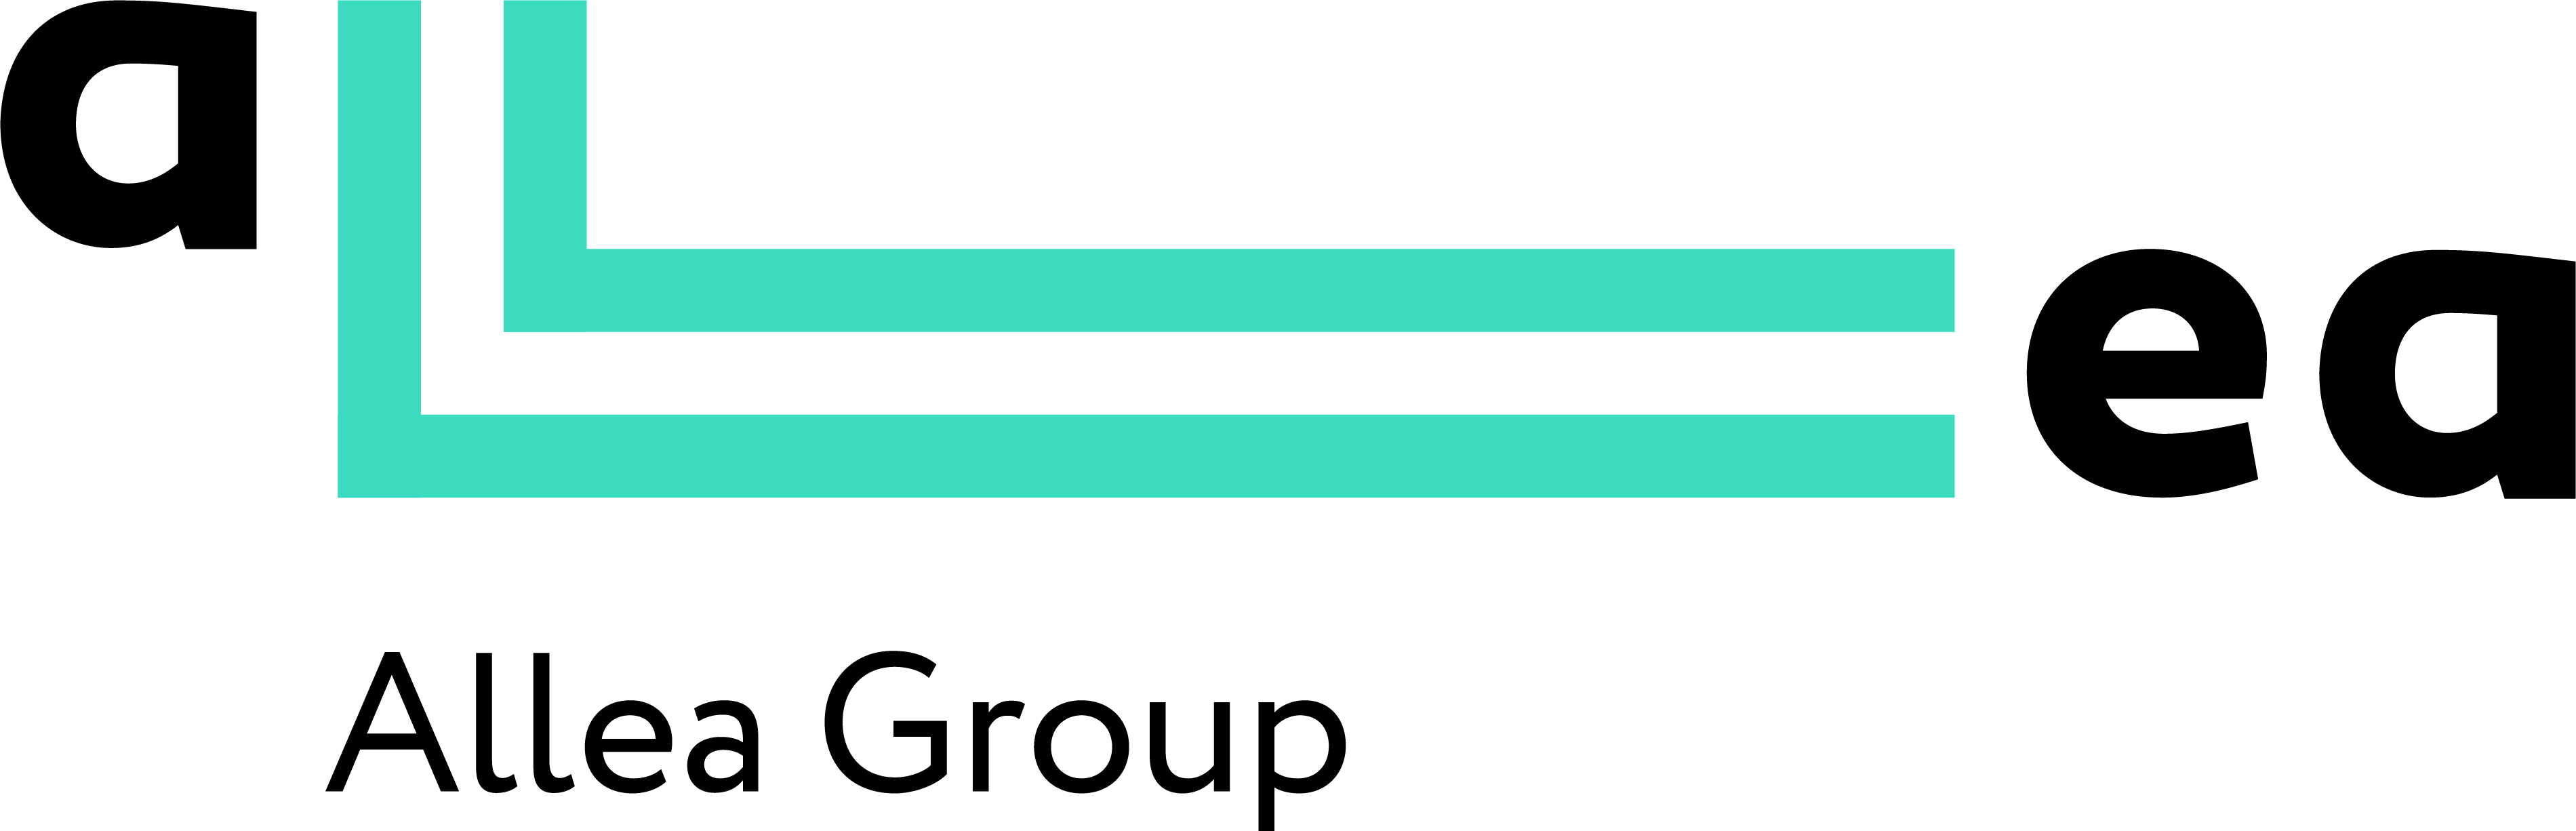 Allea Group Logo Long